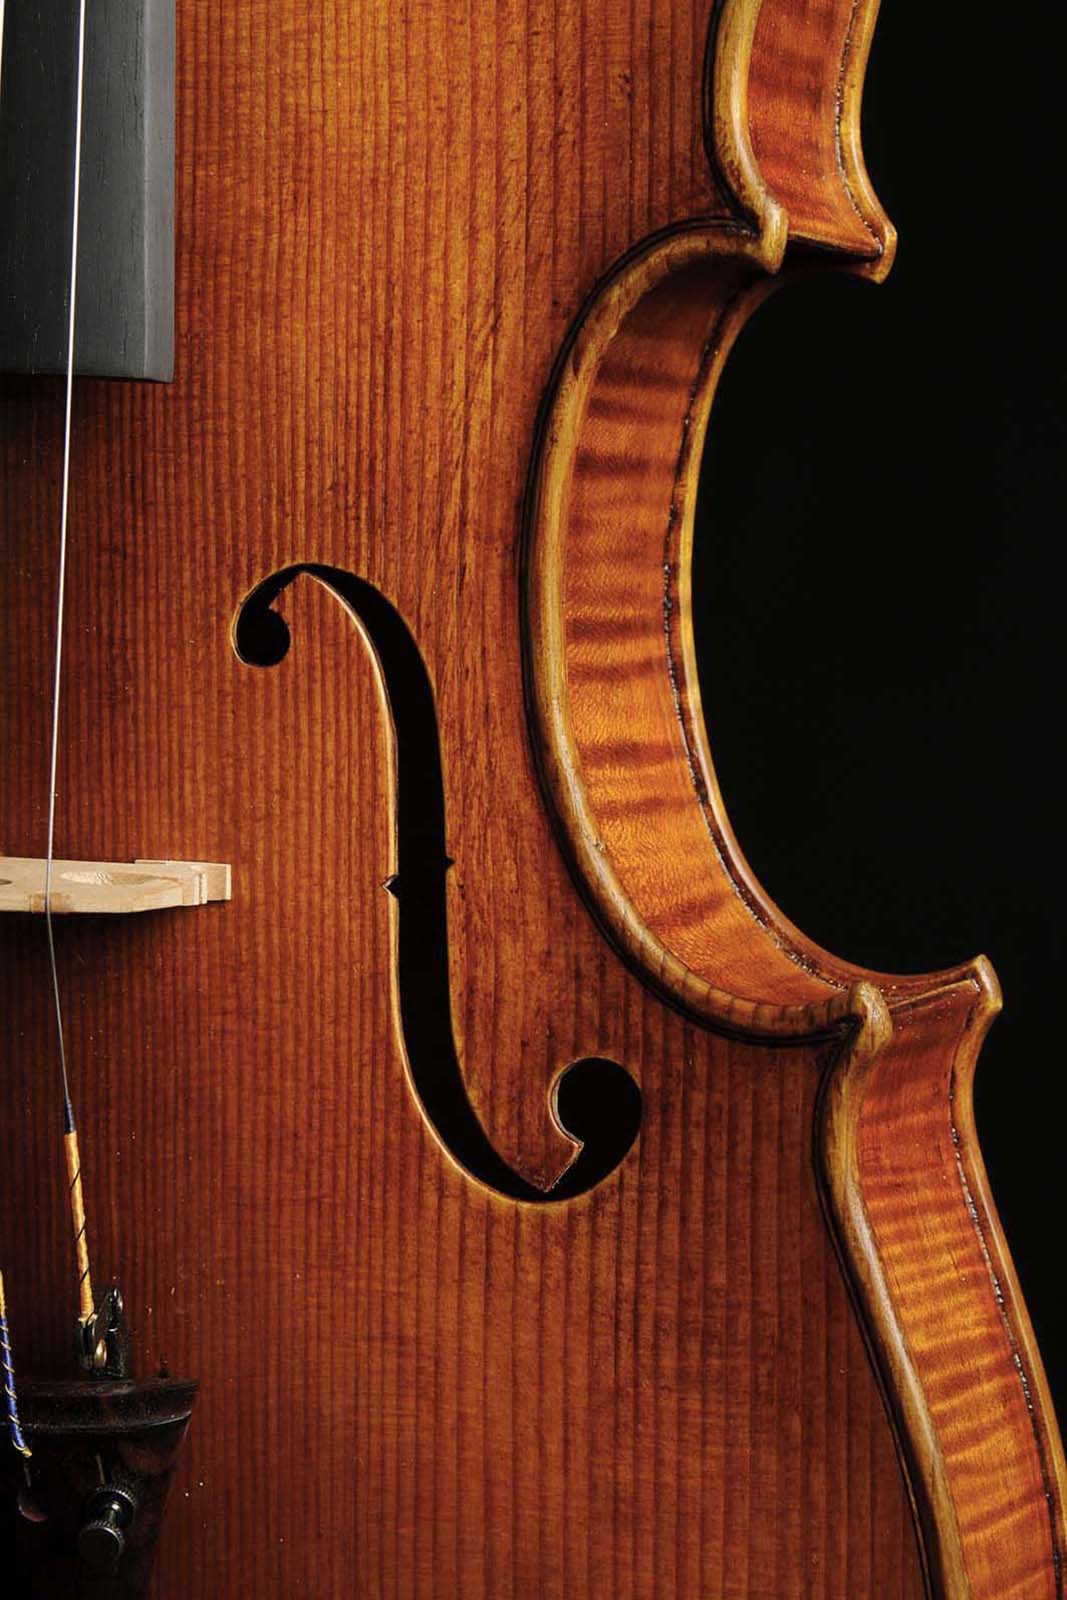 Antonio Stradivari Cremona 1672 “Tigre“ cm 42 - Image 5